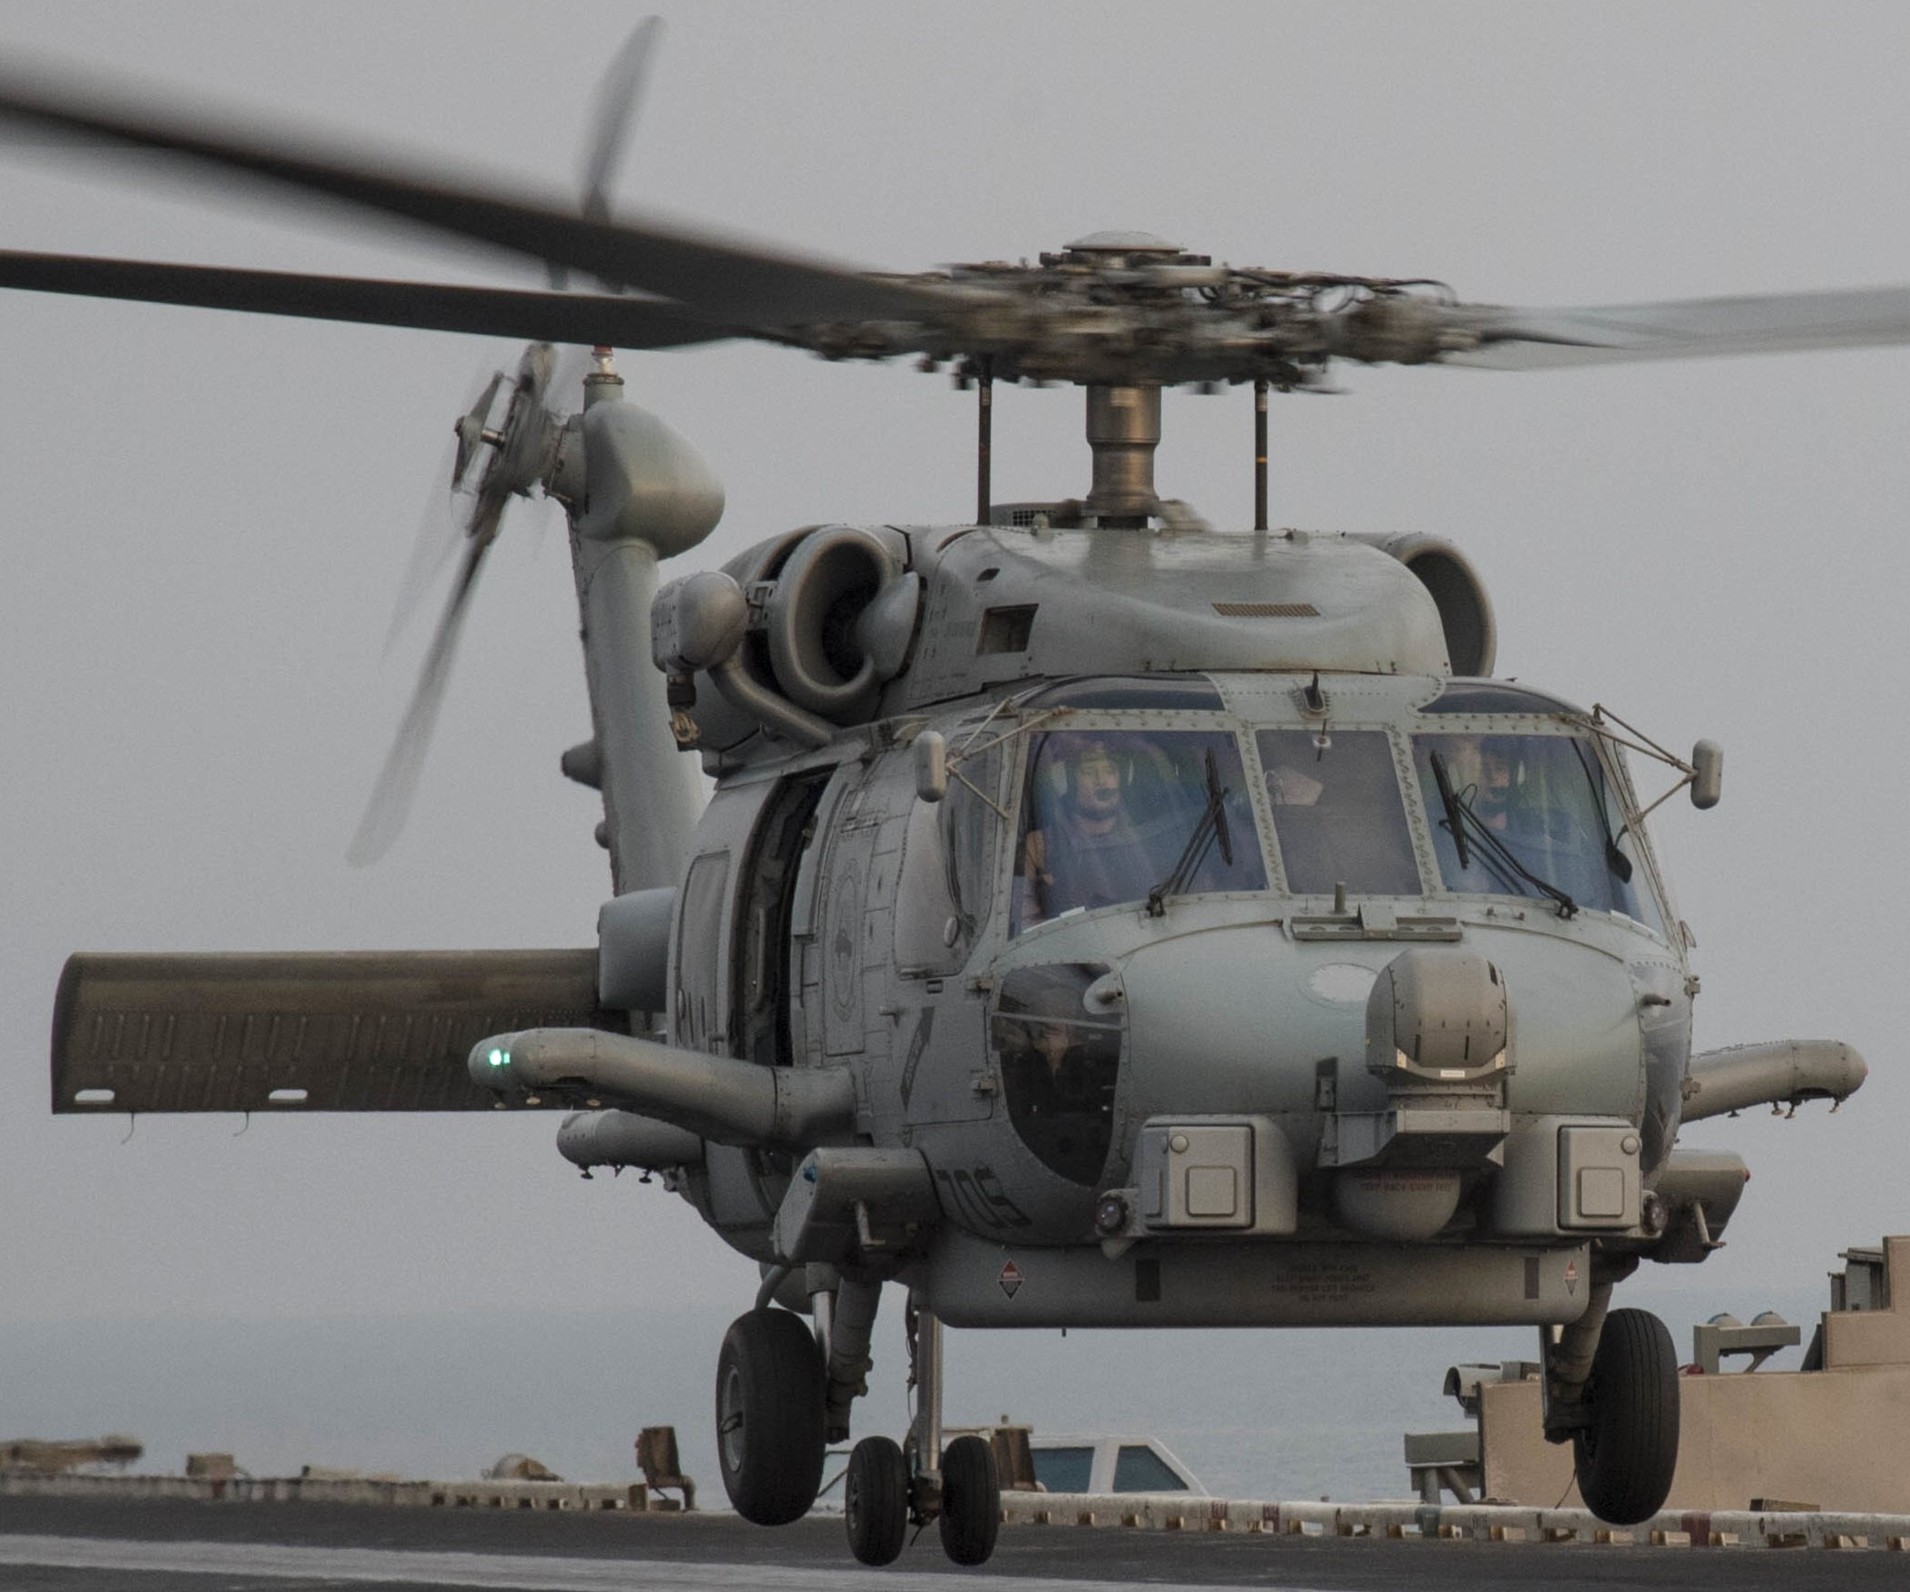 hsm-74 swamp foxes helicopter maritime strike squadron us navy mh-60r seahawk 2016 54 uss dwight d. eisenhower cvn-69 cvw-3